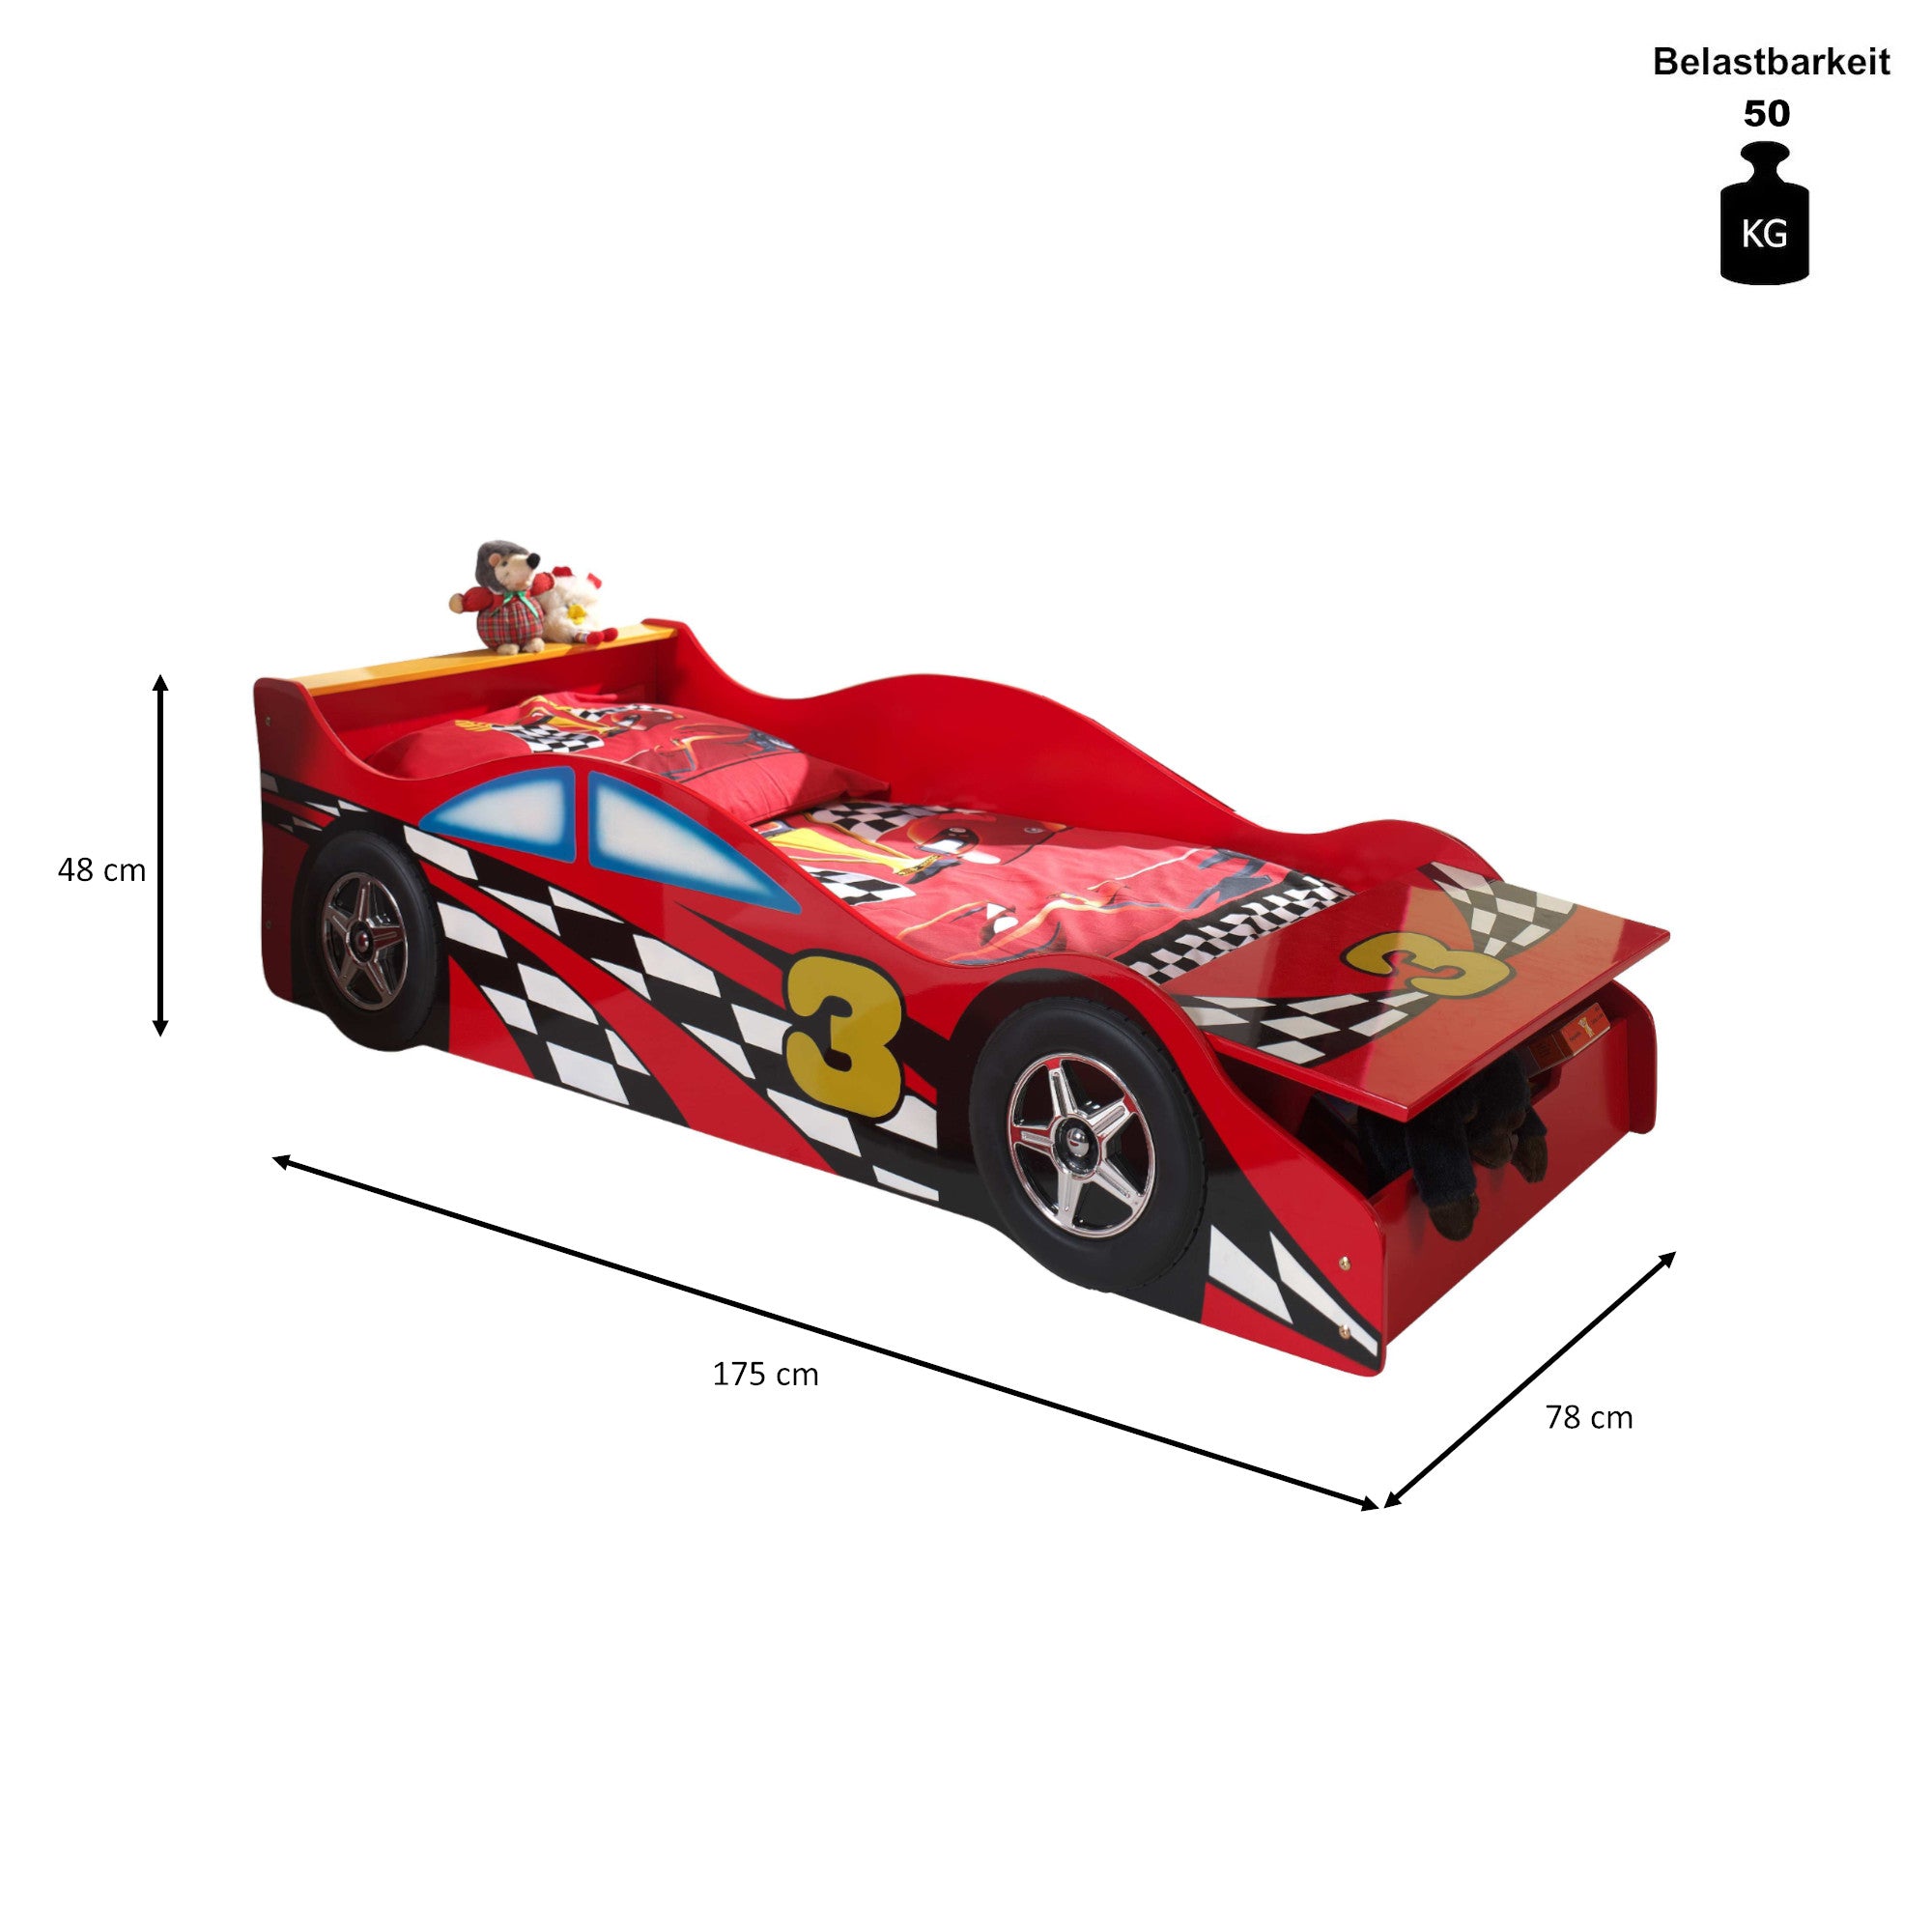 Autobett Emilio Vipack inkl. Lattenrost aus hochwertigem MDF Holz Rennwagen-Design rot in 70*140 cm